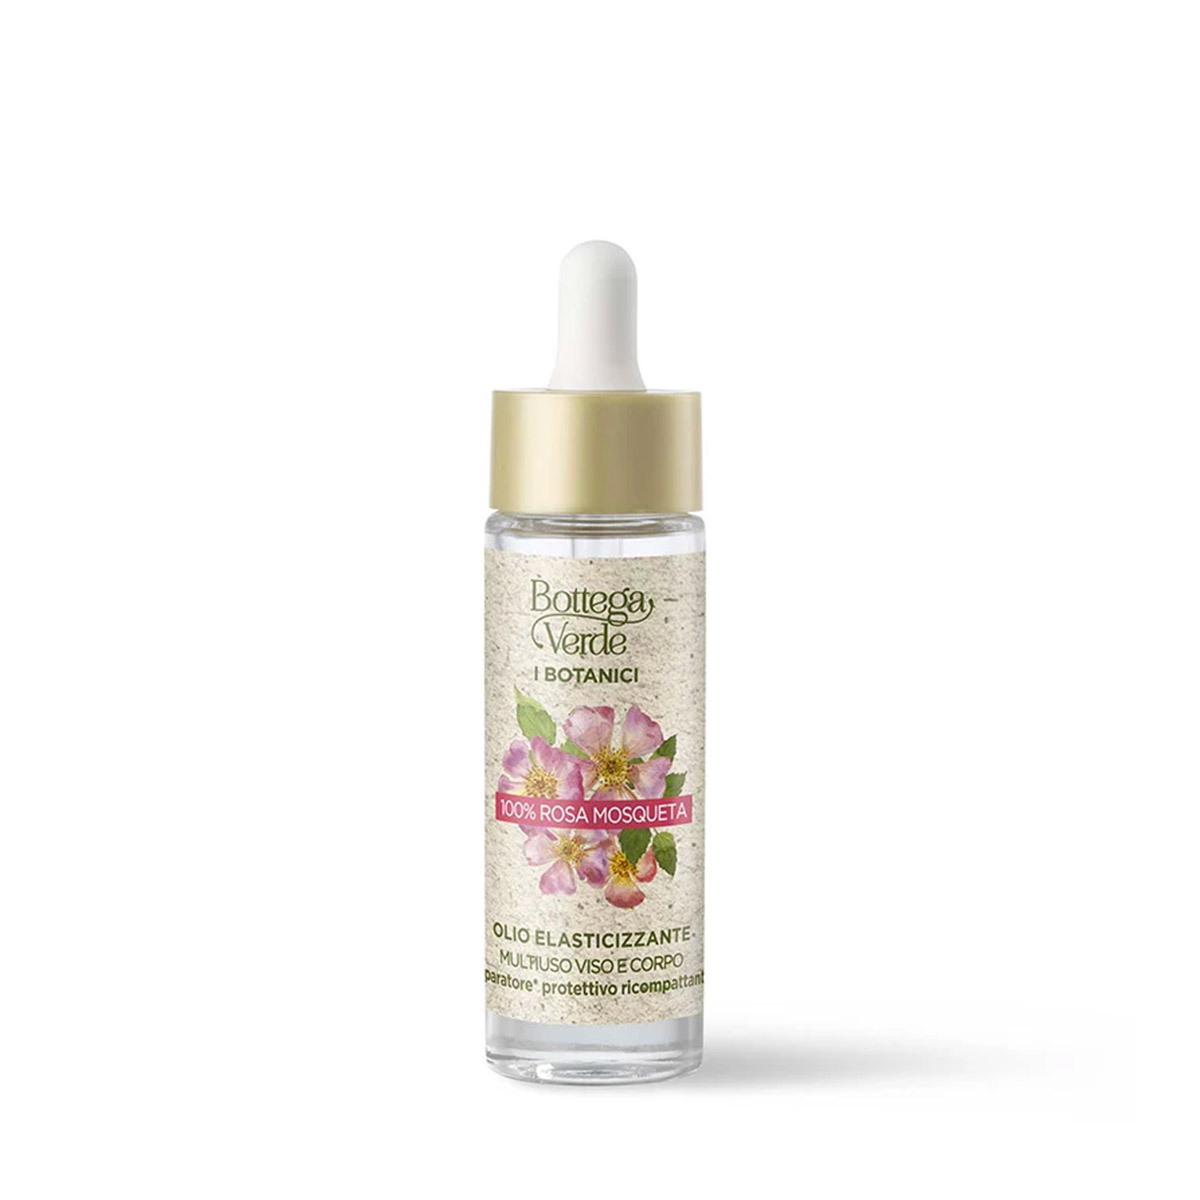 I Botanici - Elasticising multi-use face and body oil - 100% Mosqueta Rose - repairing*, protective, compacting (30 ml)